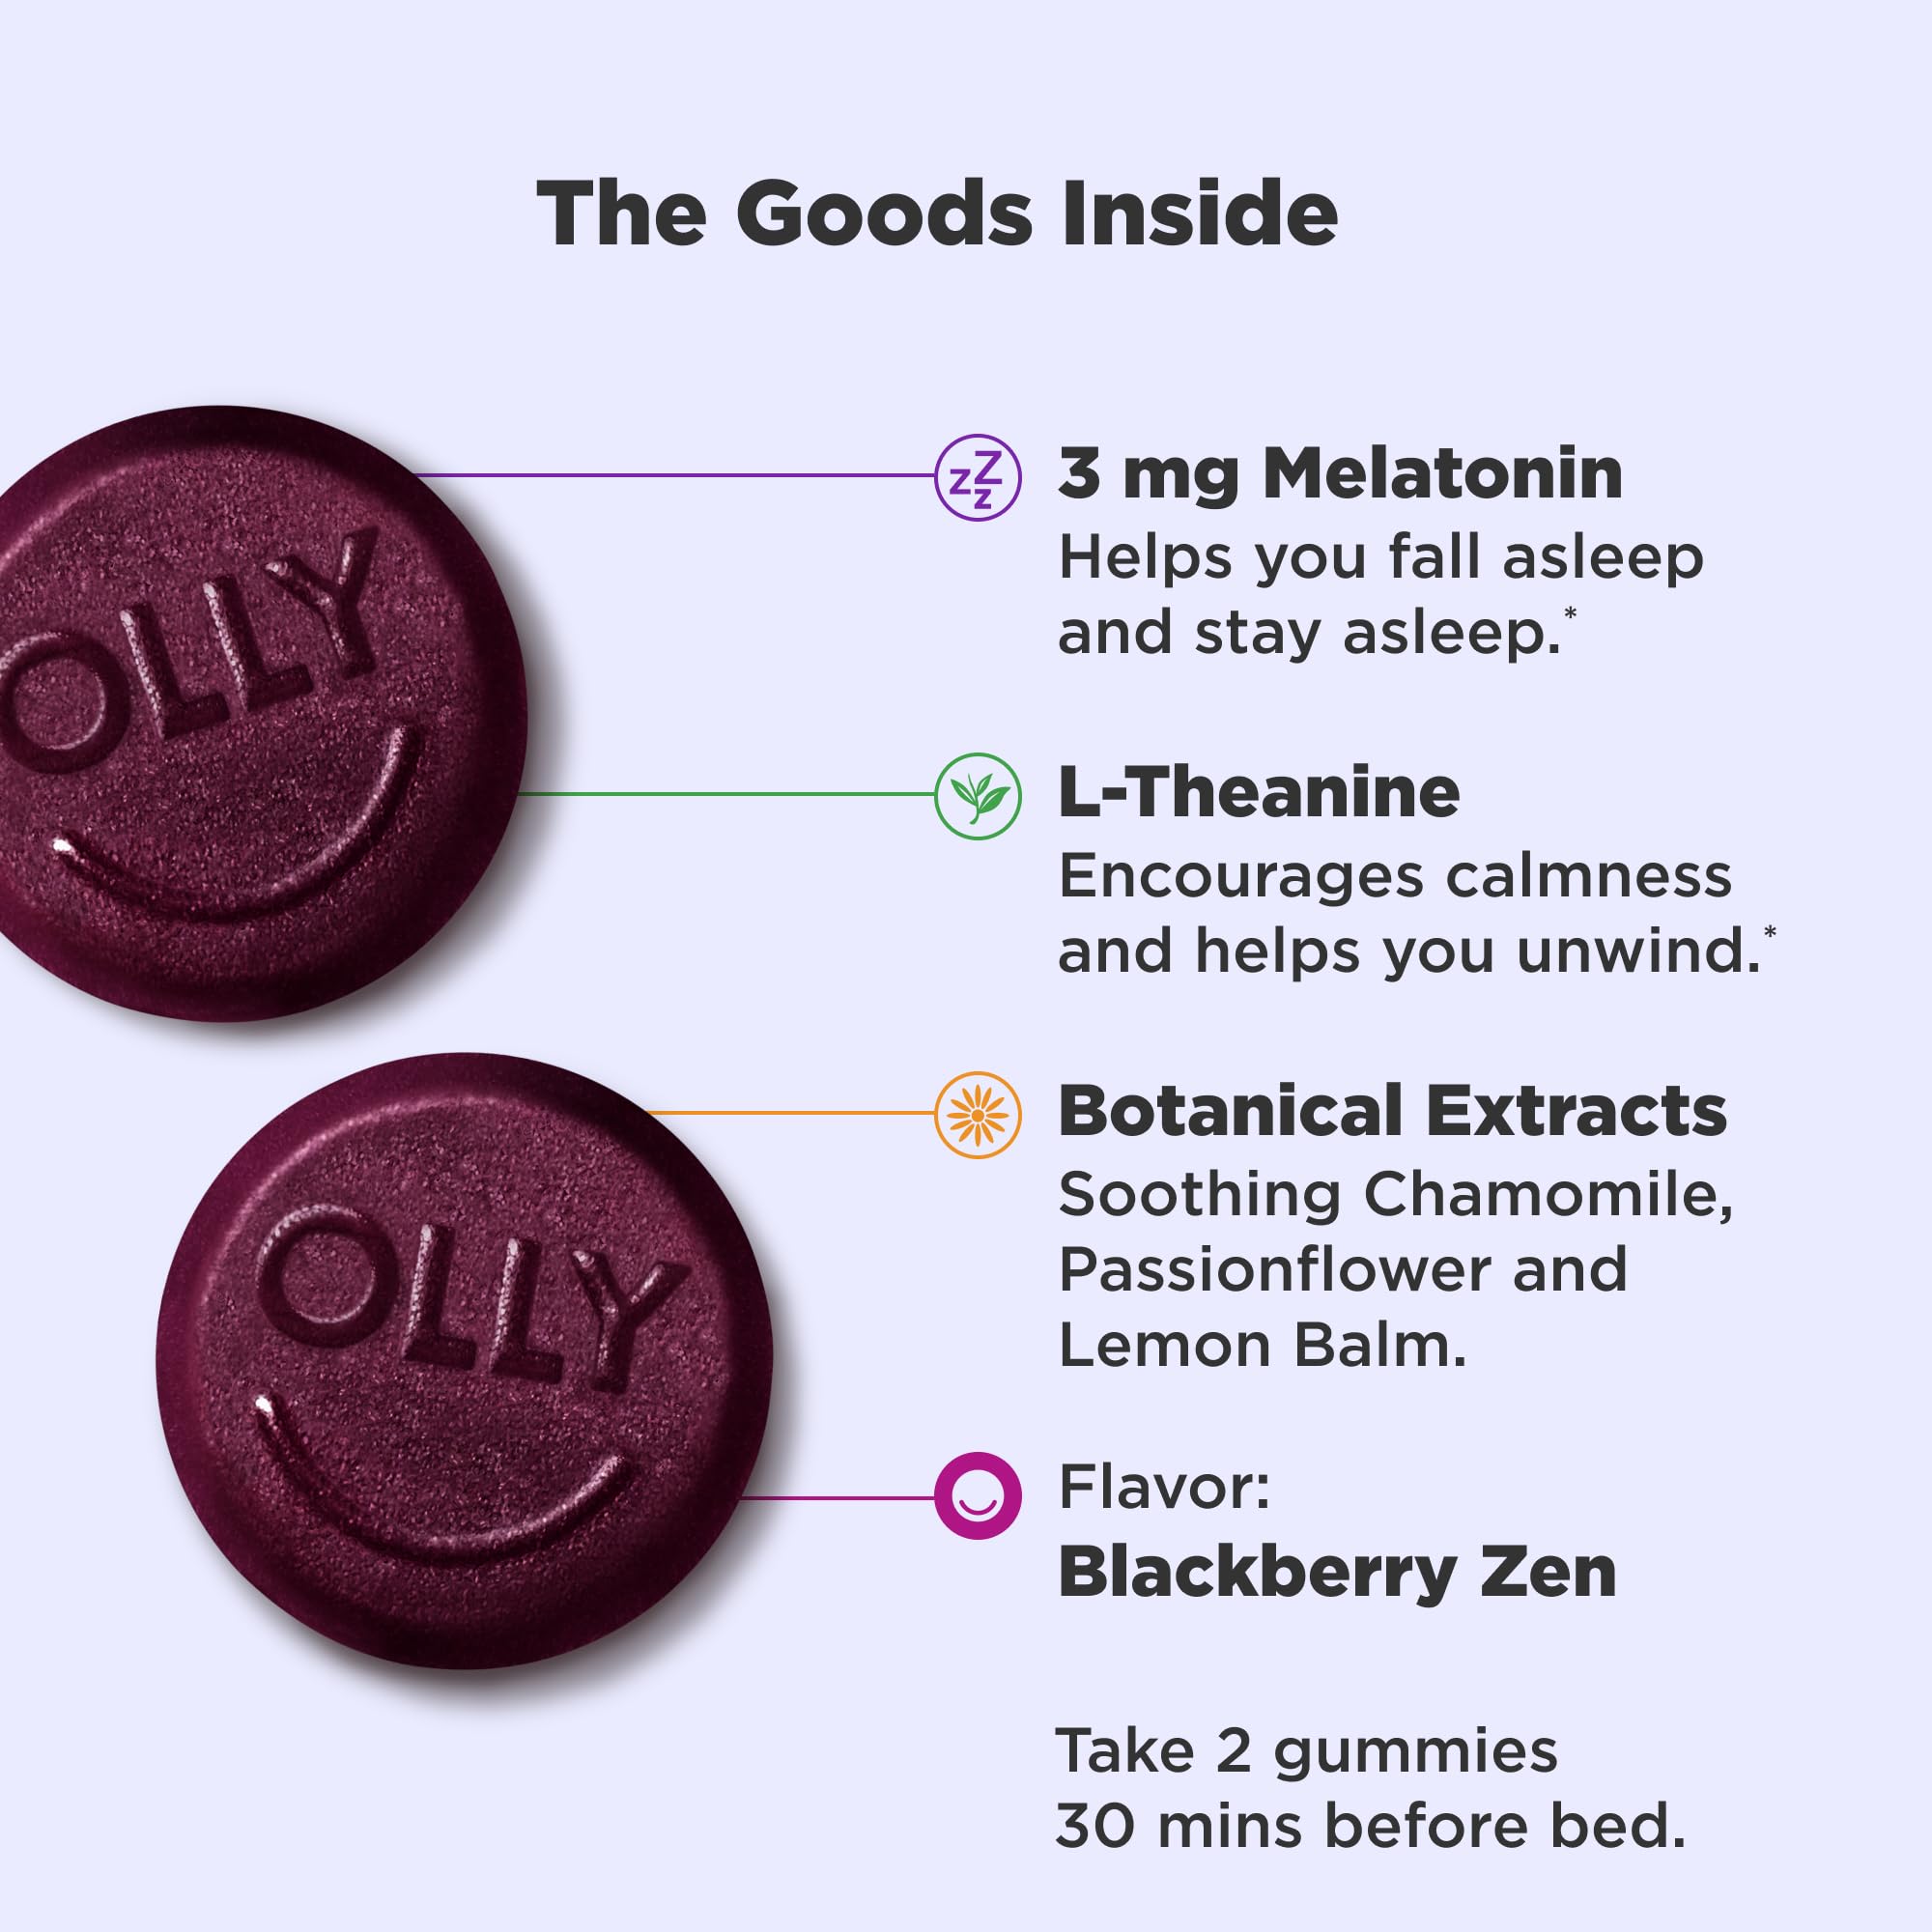 OLLY Sleep Gummy, Occasional Sleep Support, 3 mg Melatonin, L-Theanine, Chamomile, Lemon Balm, Sleep Aid, Blackberry, 50 Count